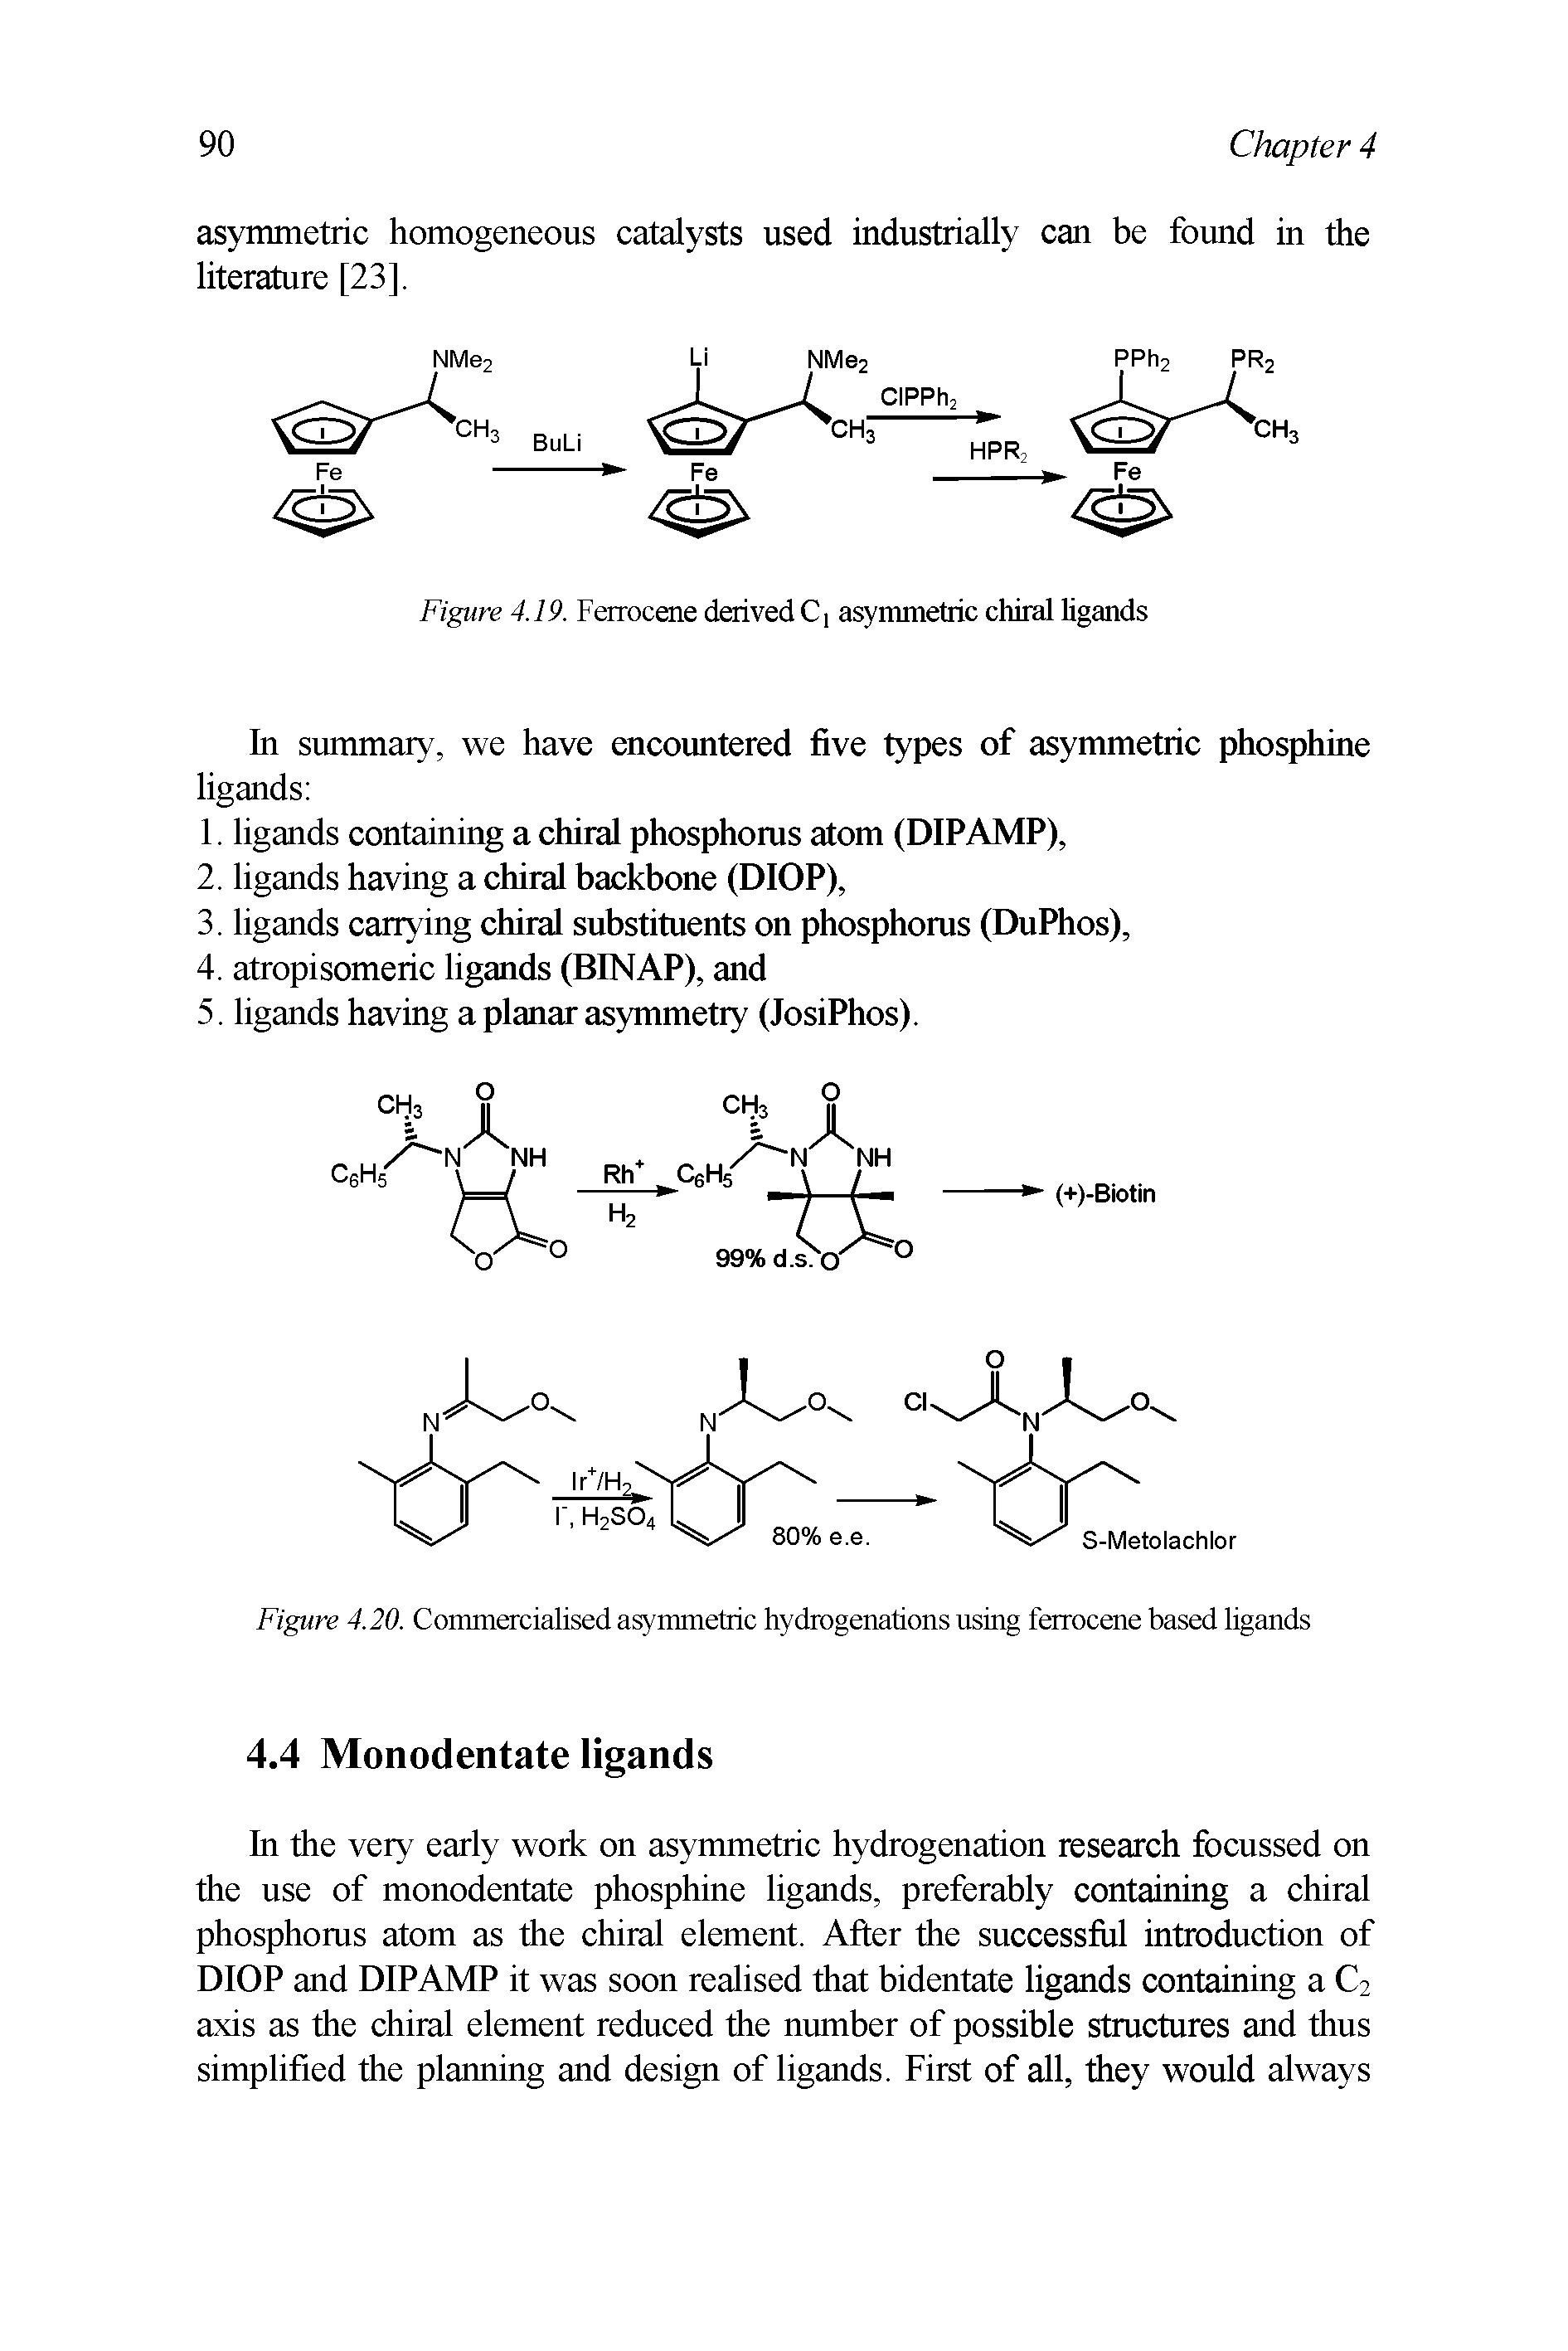 Figure 4.20. Commercialised asymmetric hydrogenations using ferrocene based ligands...